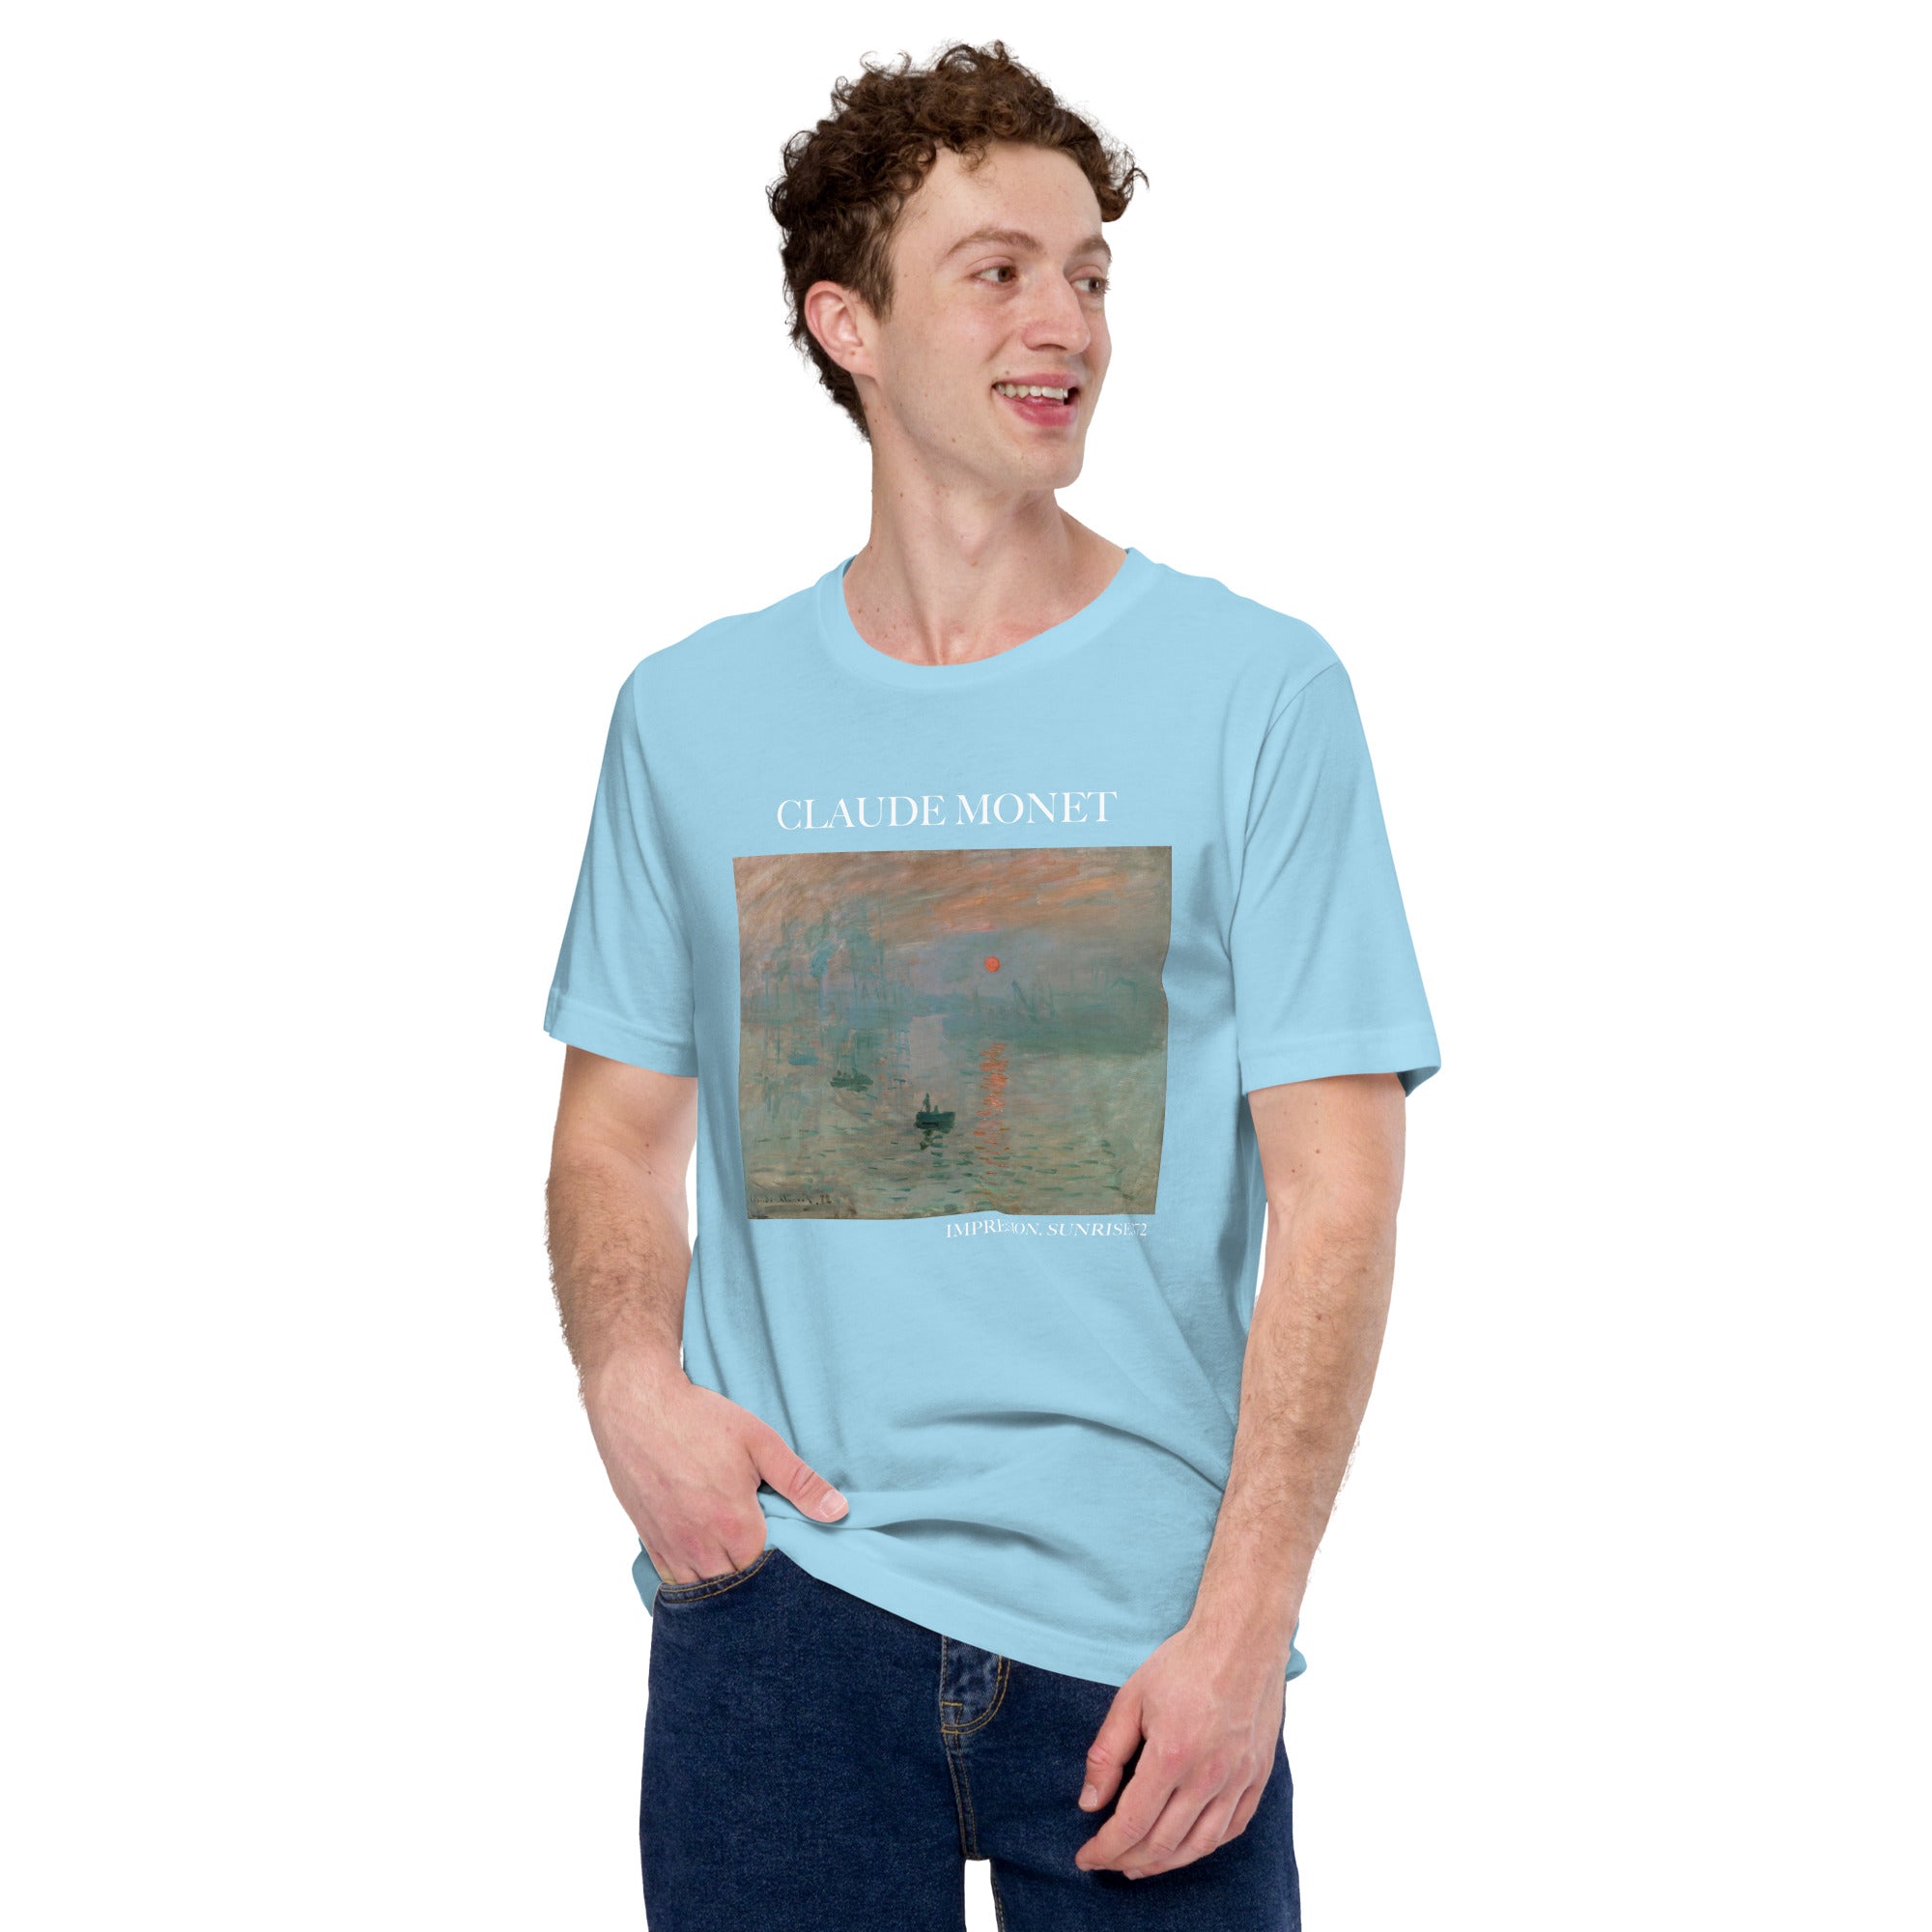 Claude Monet 'Impression, Sunrise' Famous Painting T-Shirt | Unisex Classic Art Tee